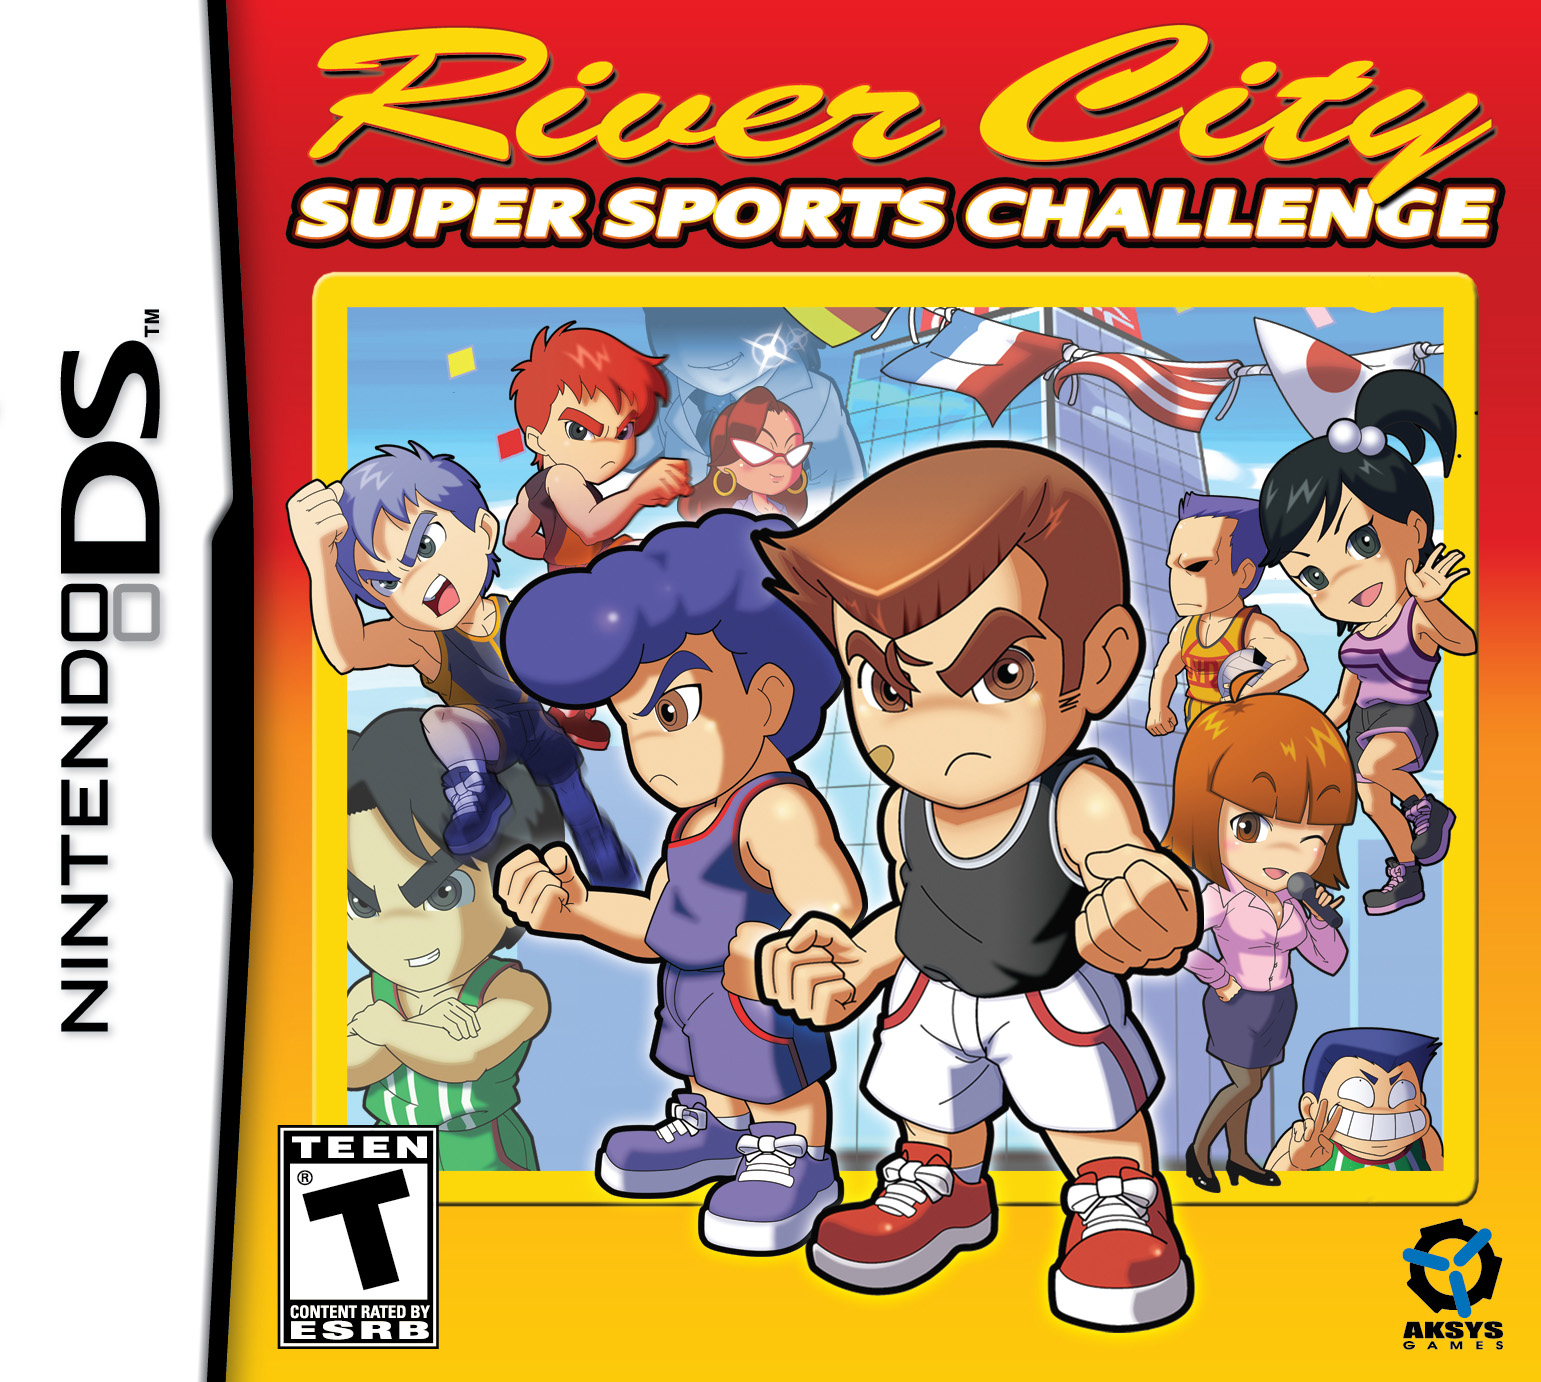 River City Sports Challenge, Aksys Games, NintendoDS, 893610001358 - image 1 of 1